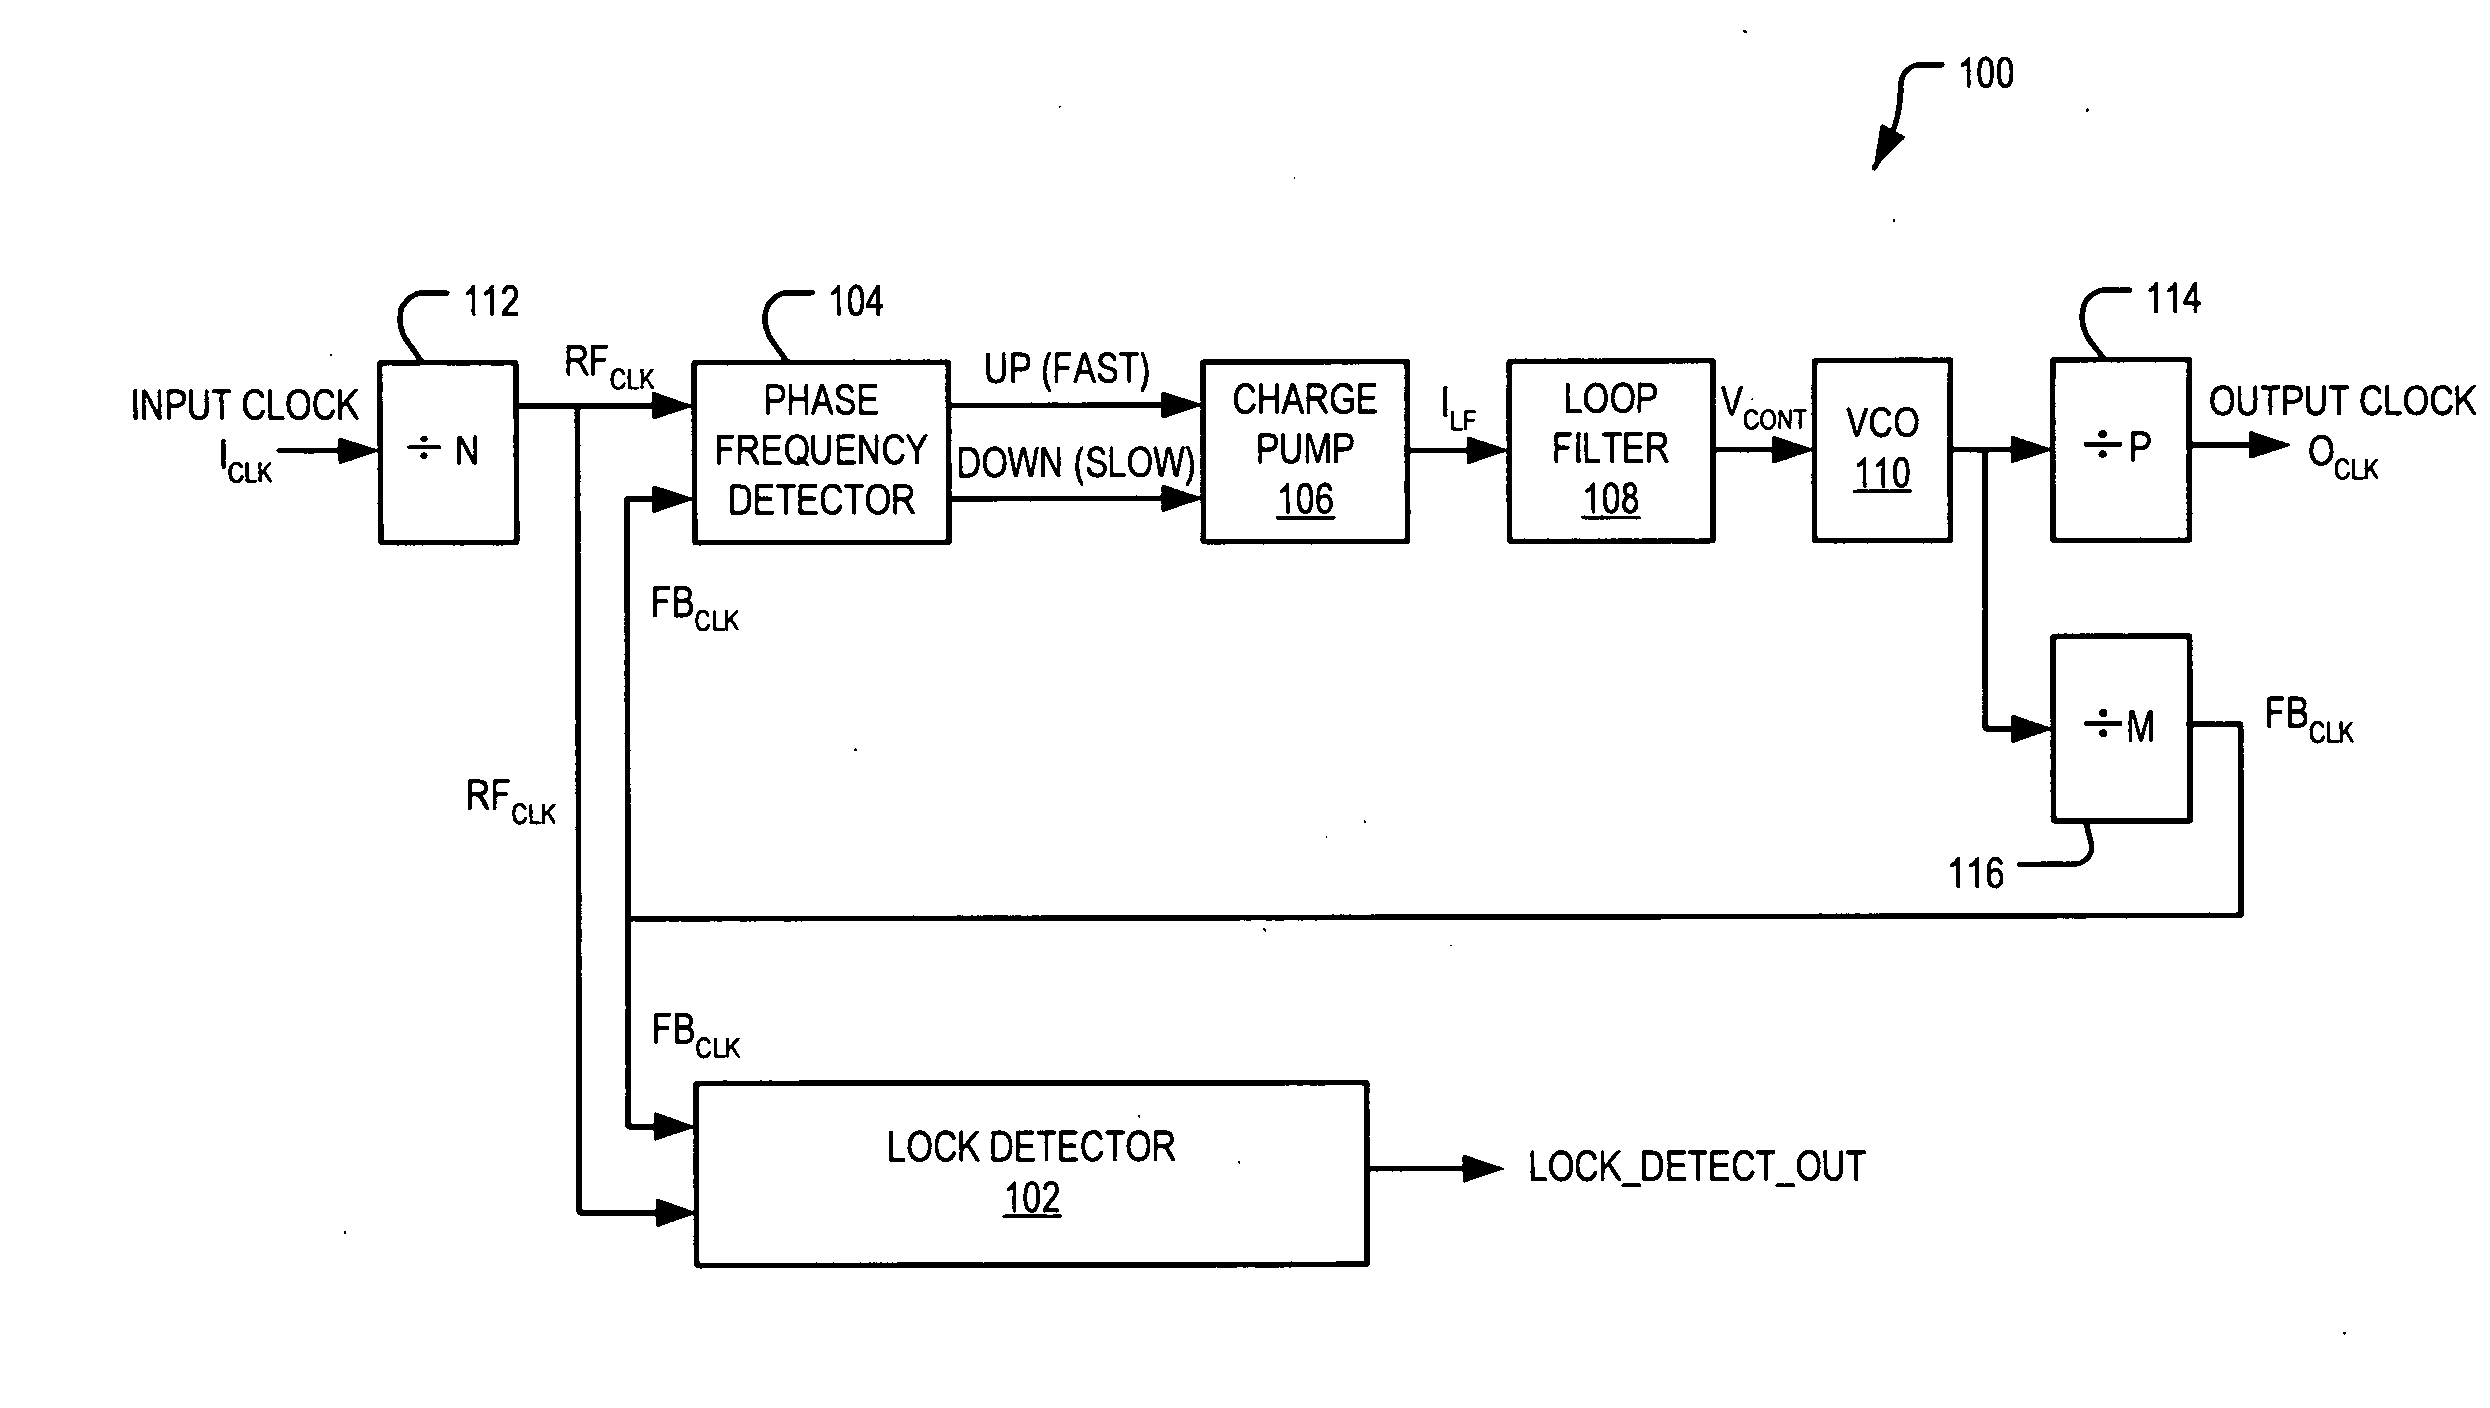 Lock detection circuit for phase locked loop